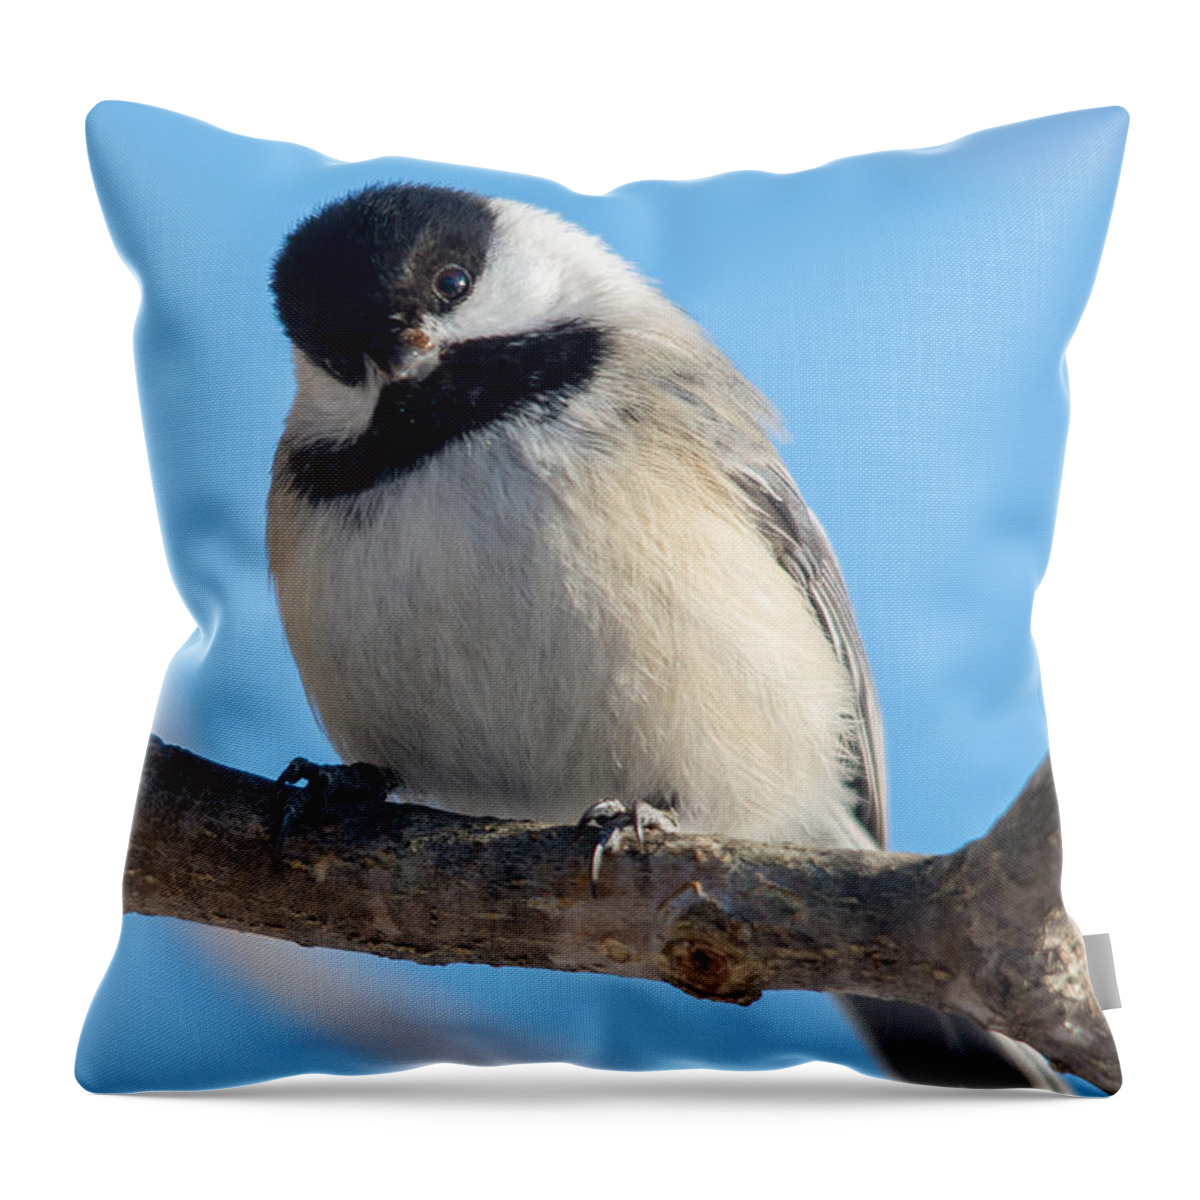 Avian Throw Pillow featuring the photograph Curious Chickadee by Cheryl Baxter